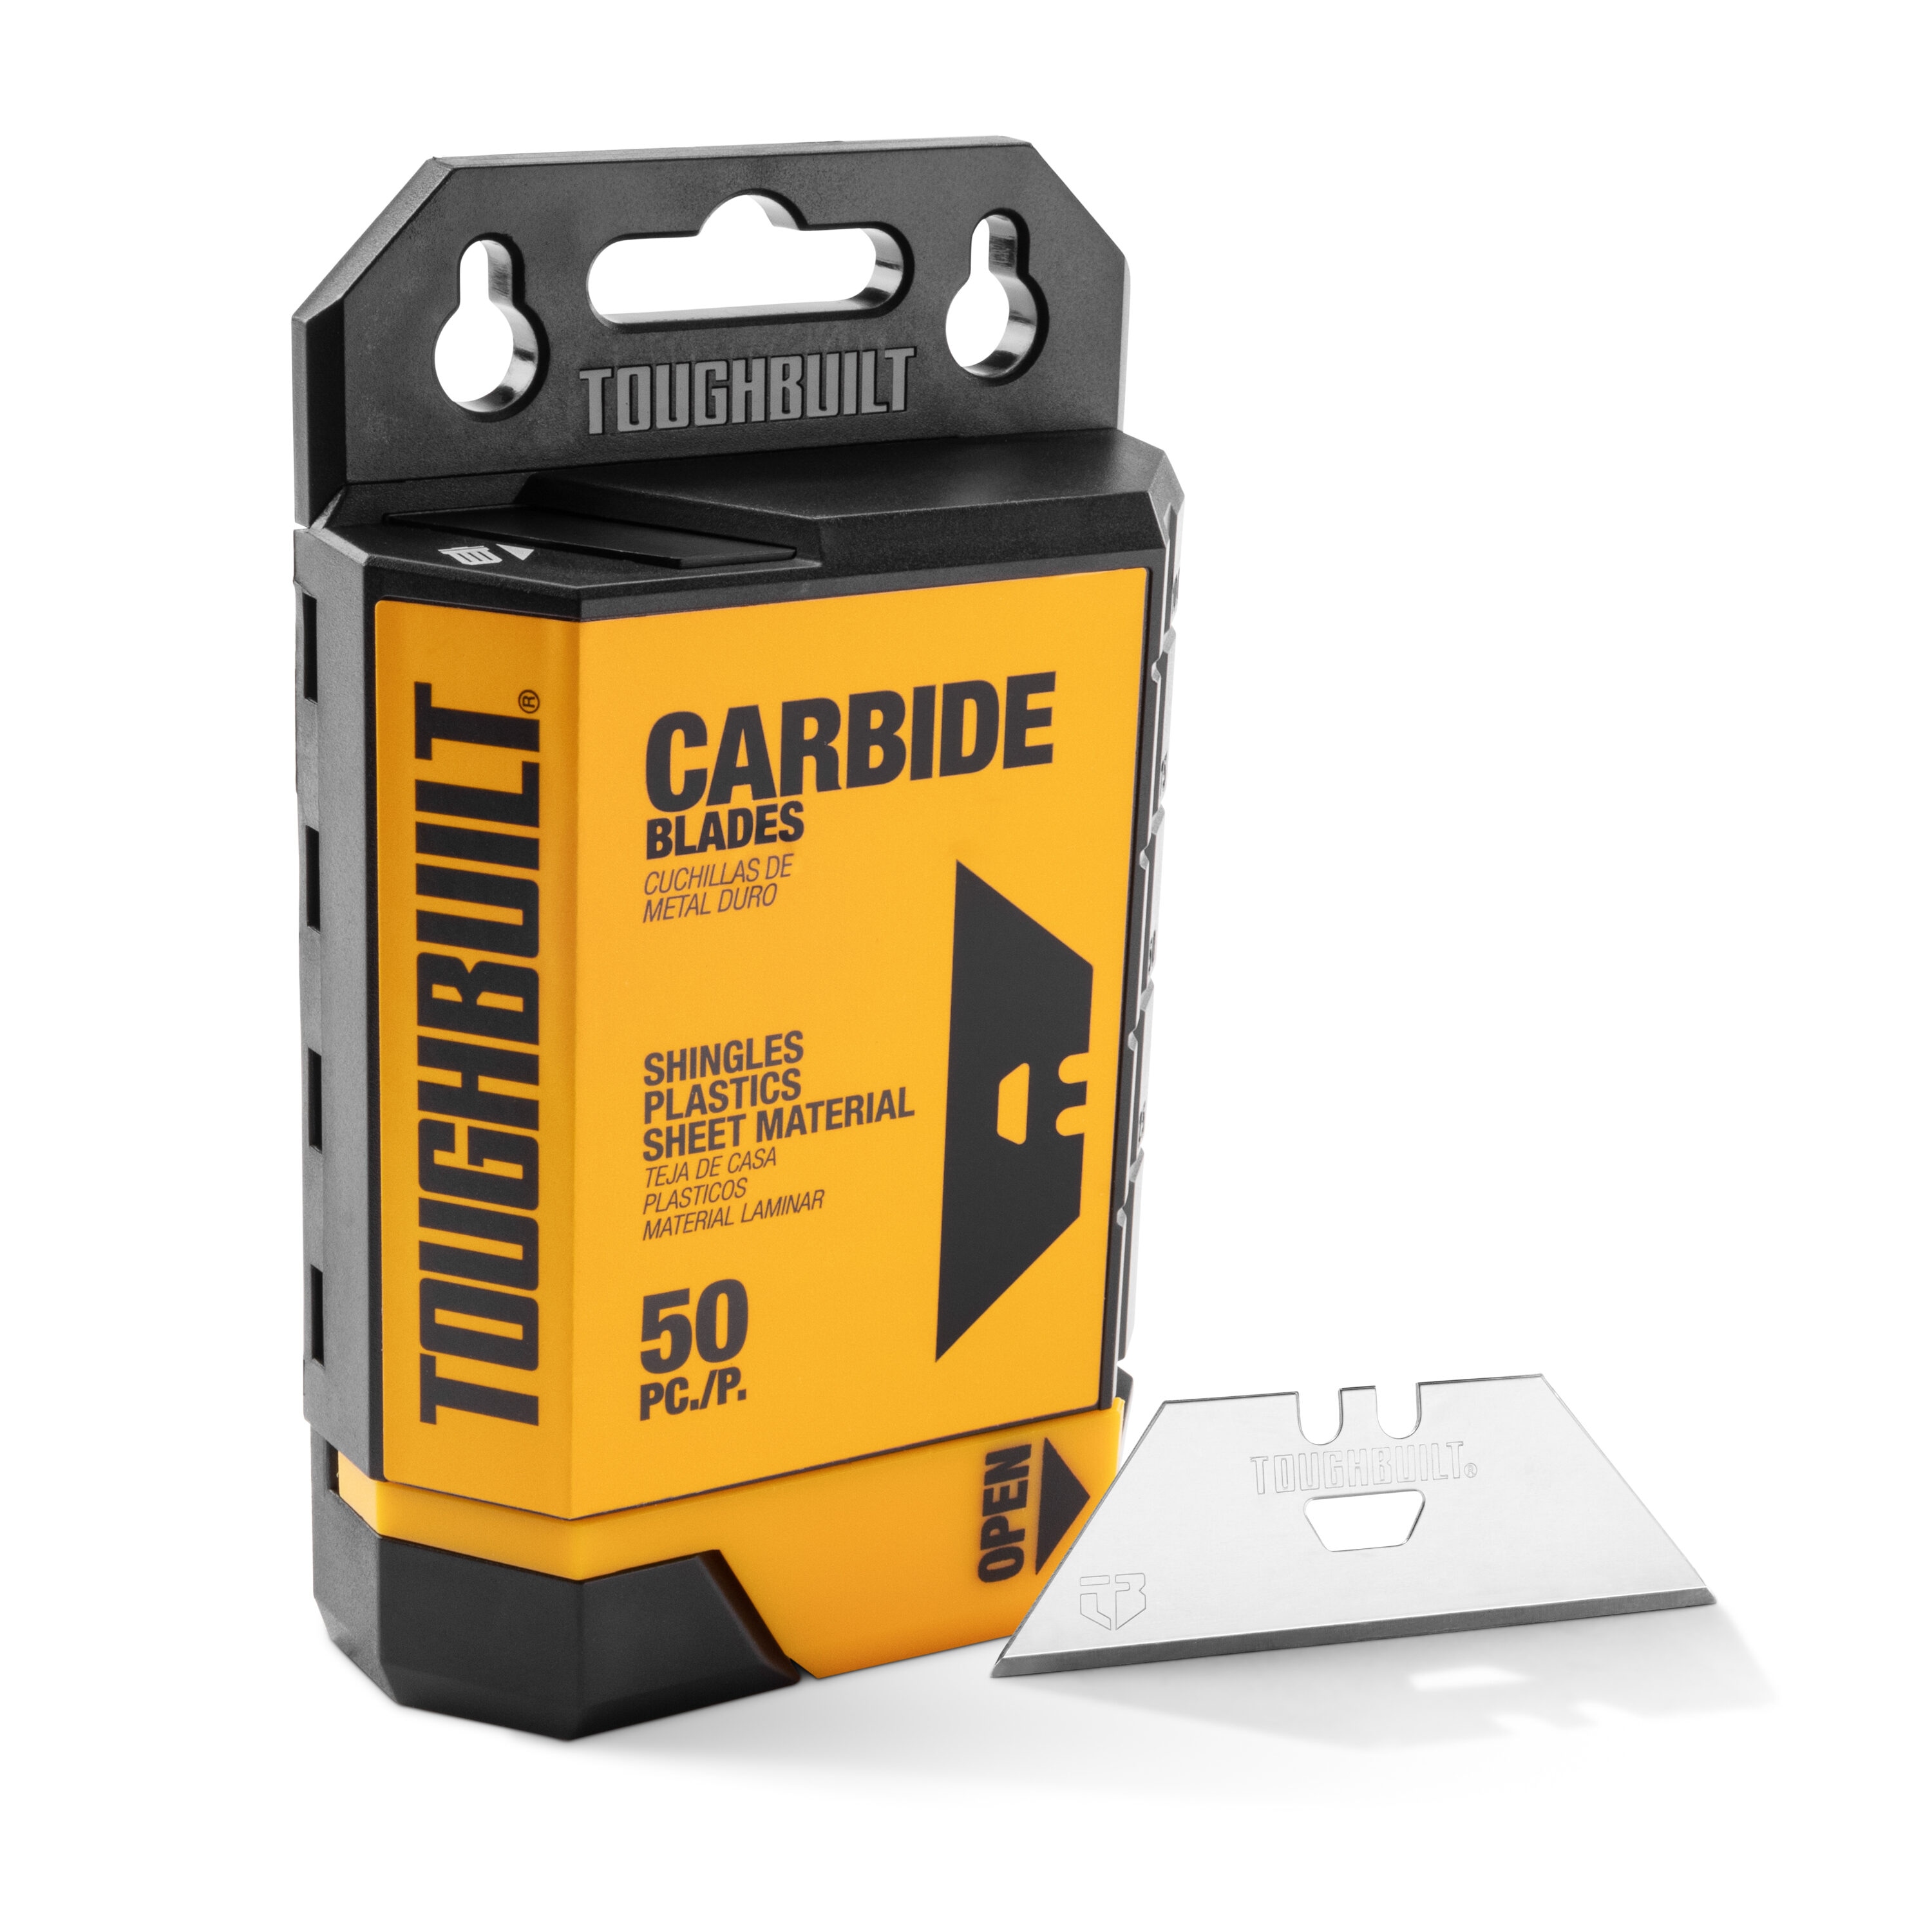 DEWALT - Carbide Utility Blades - 50 Pack  - Murdoch's